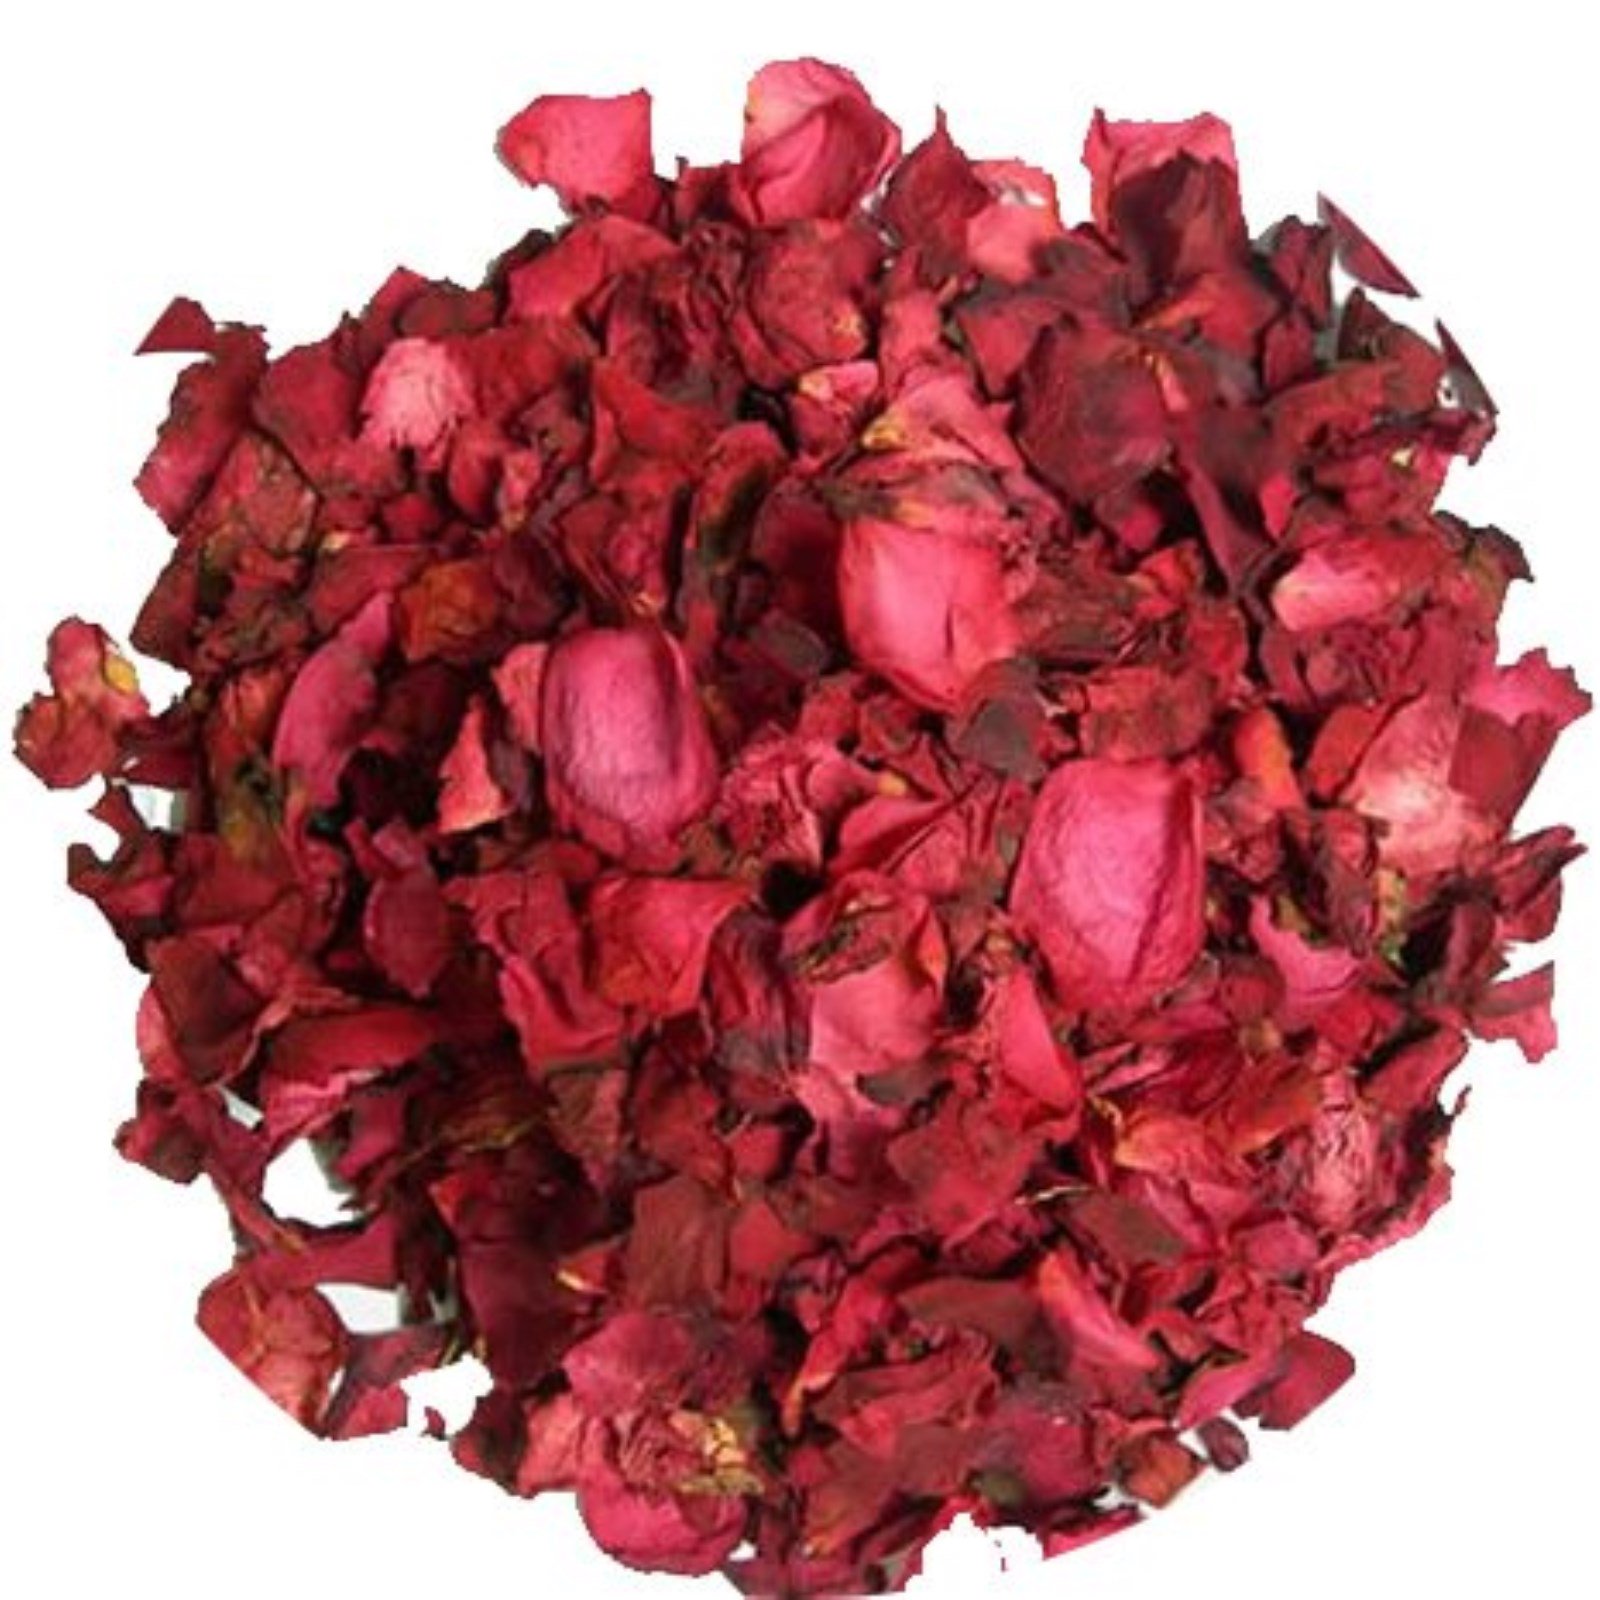 Red rose petals photo